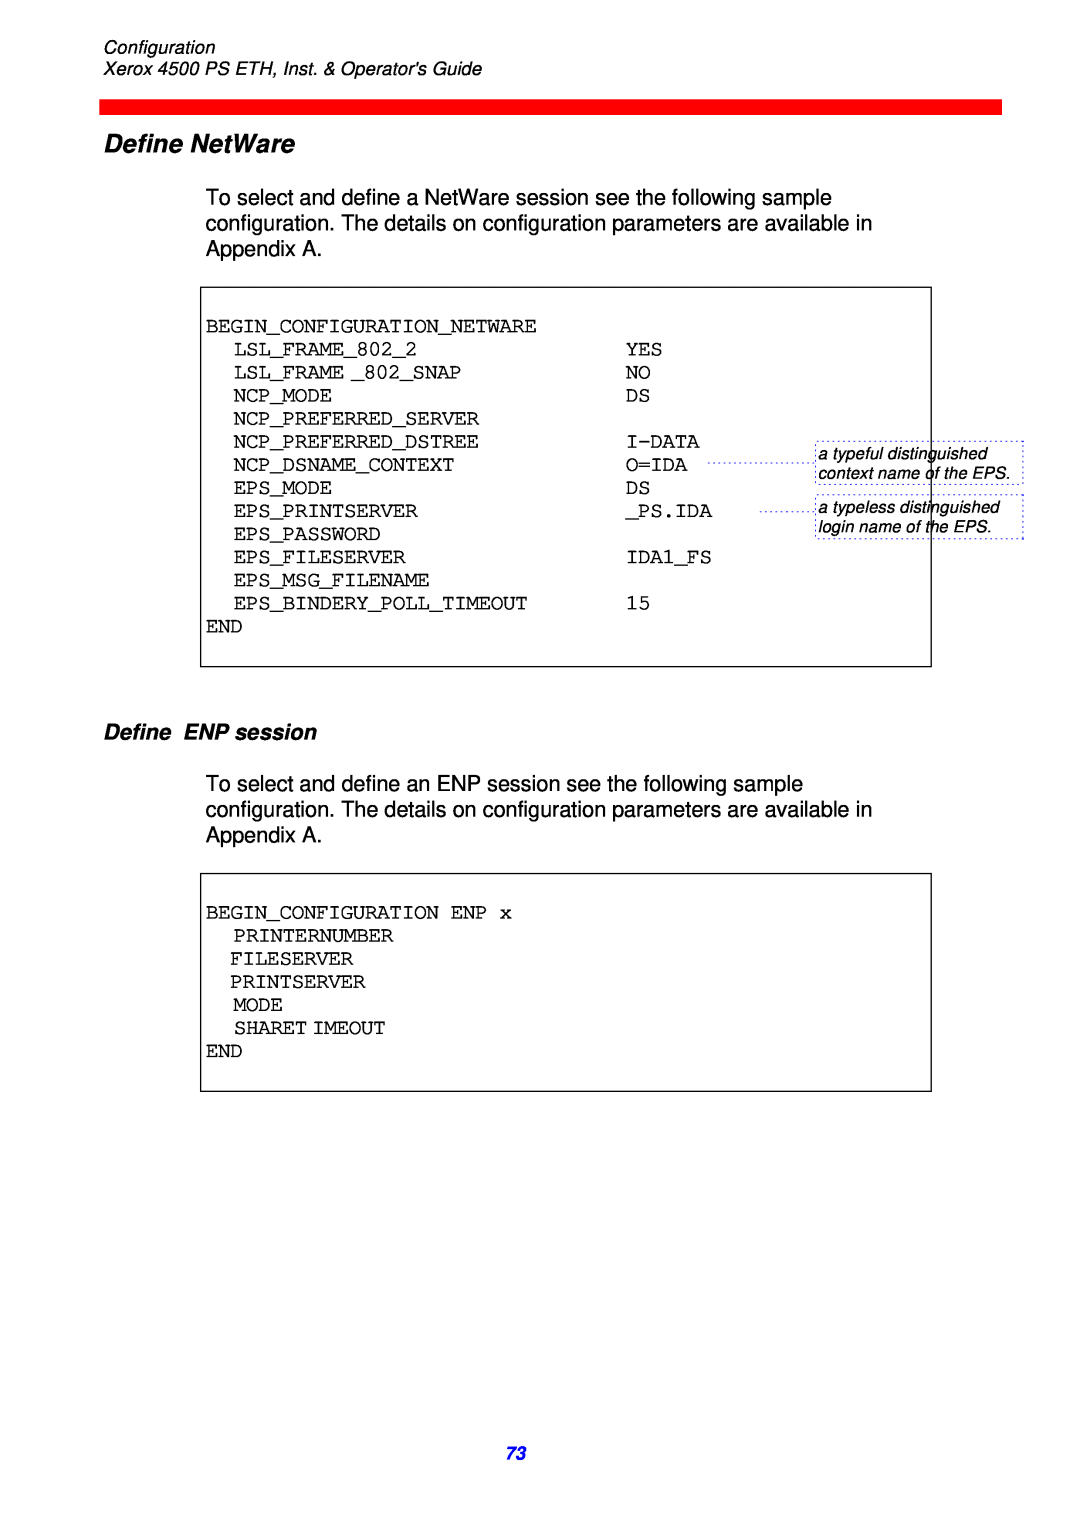 Xerox 4500 ps eth instruction manual Define NetWare, Define ENP session 